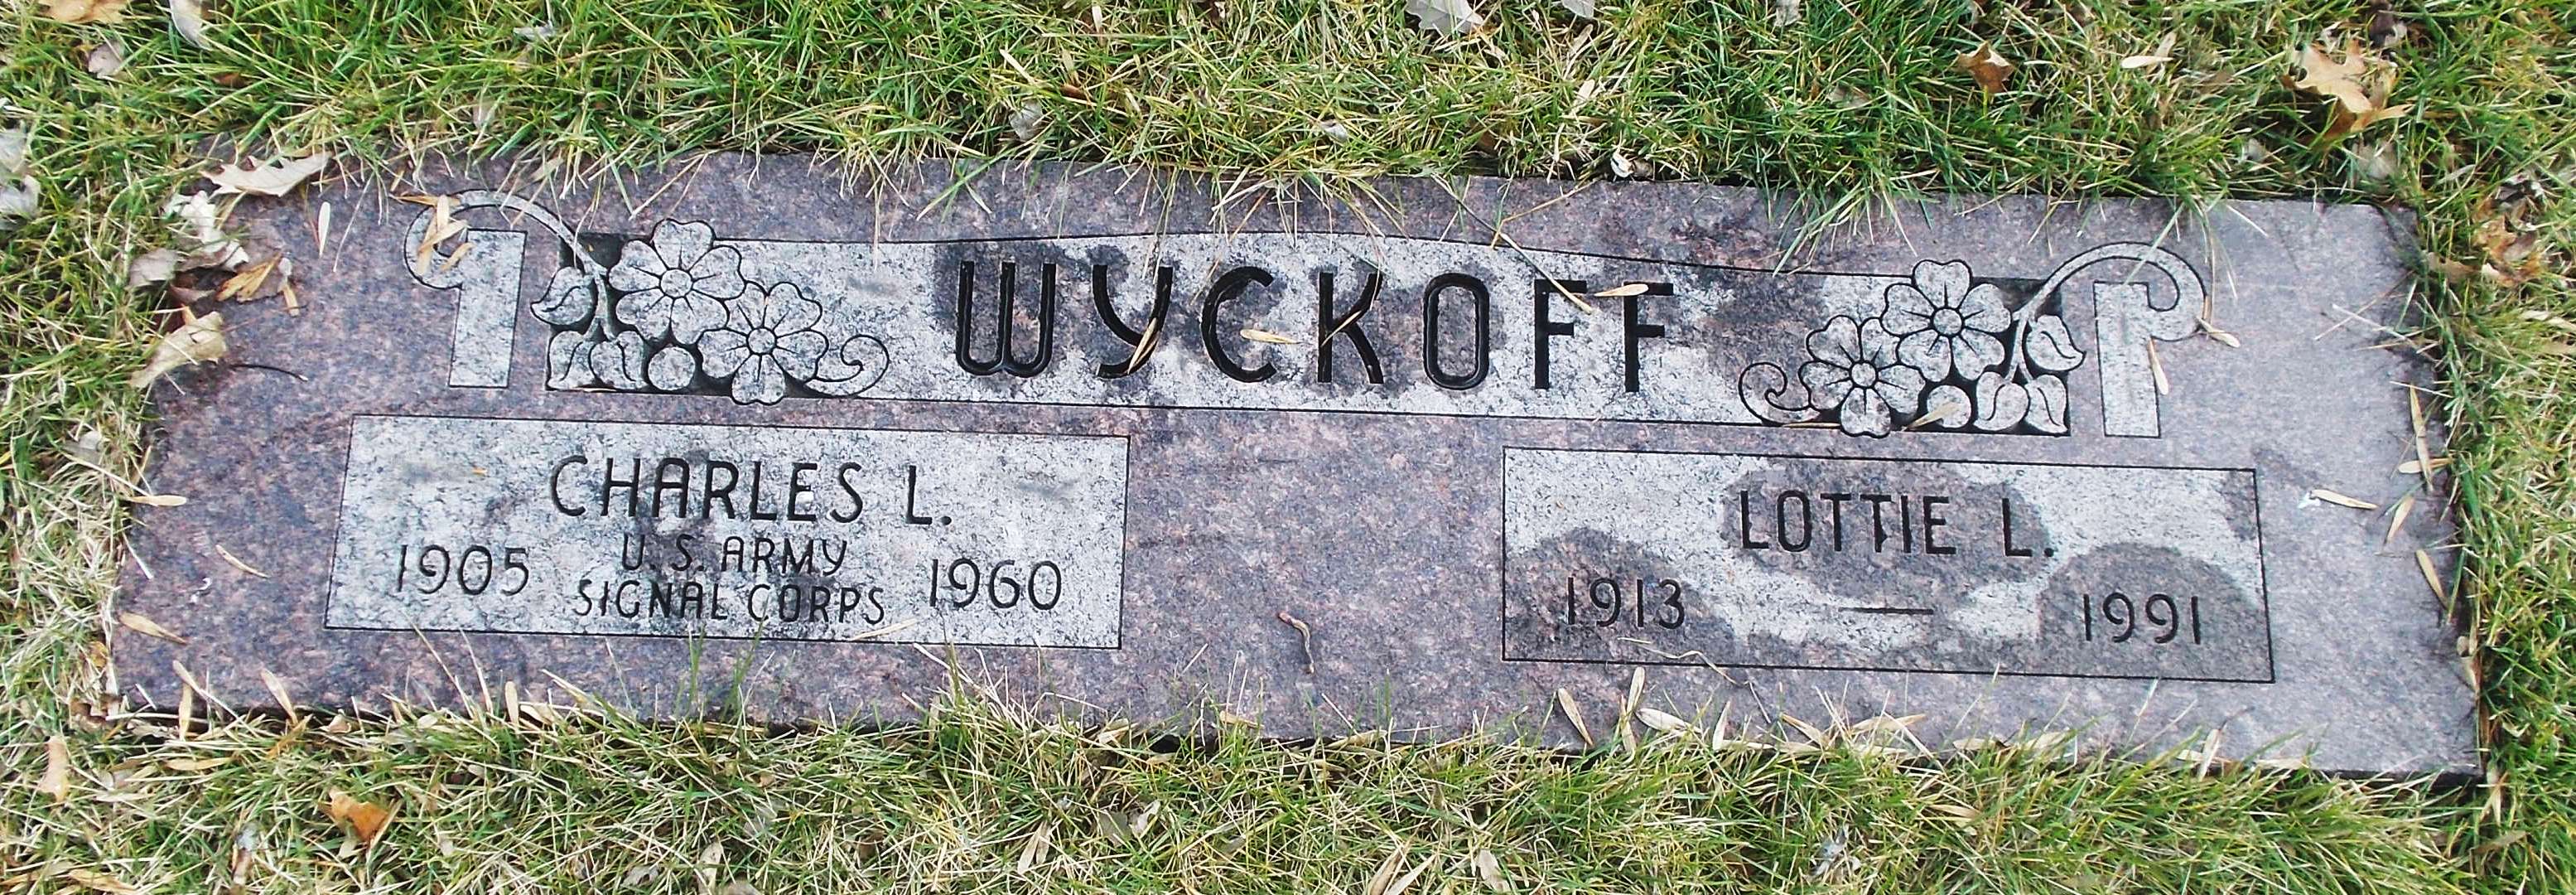 Lottie L Wyckoff